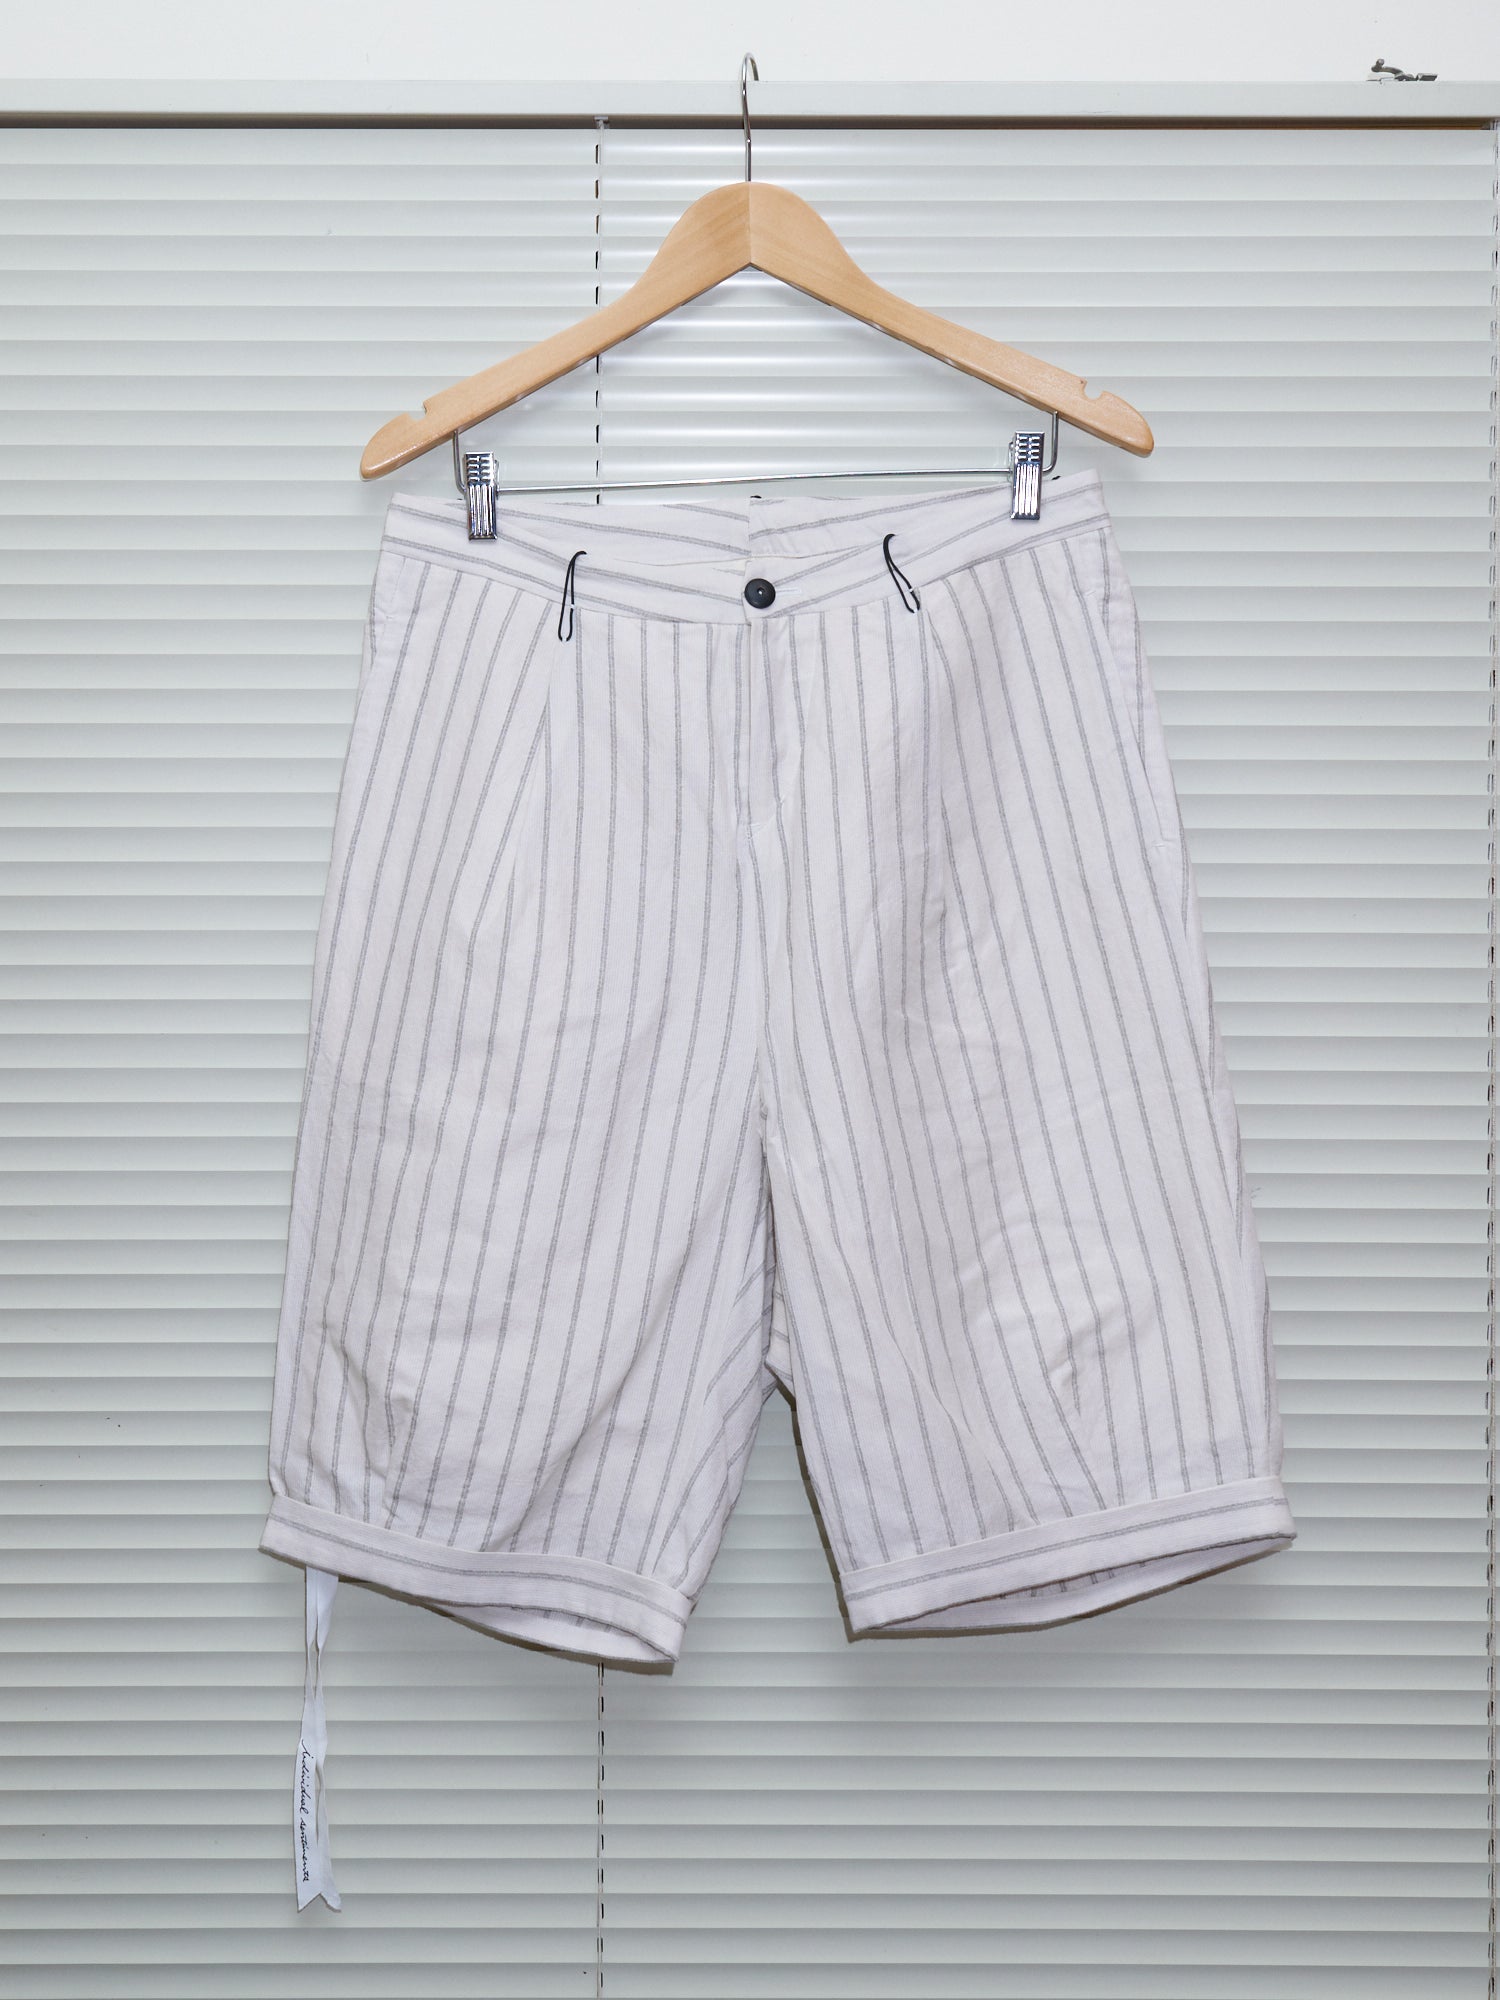 Individual Sentiments SS2014 cream striped ramie blend shorts - mens S M